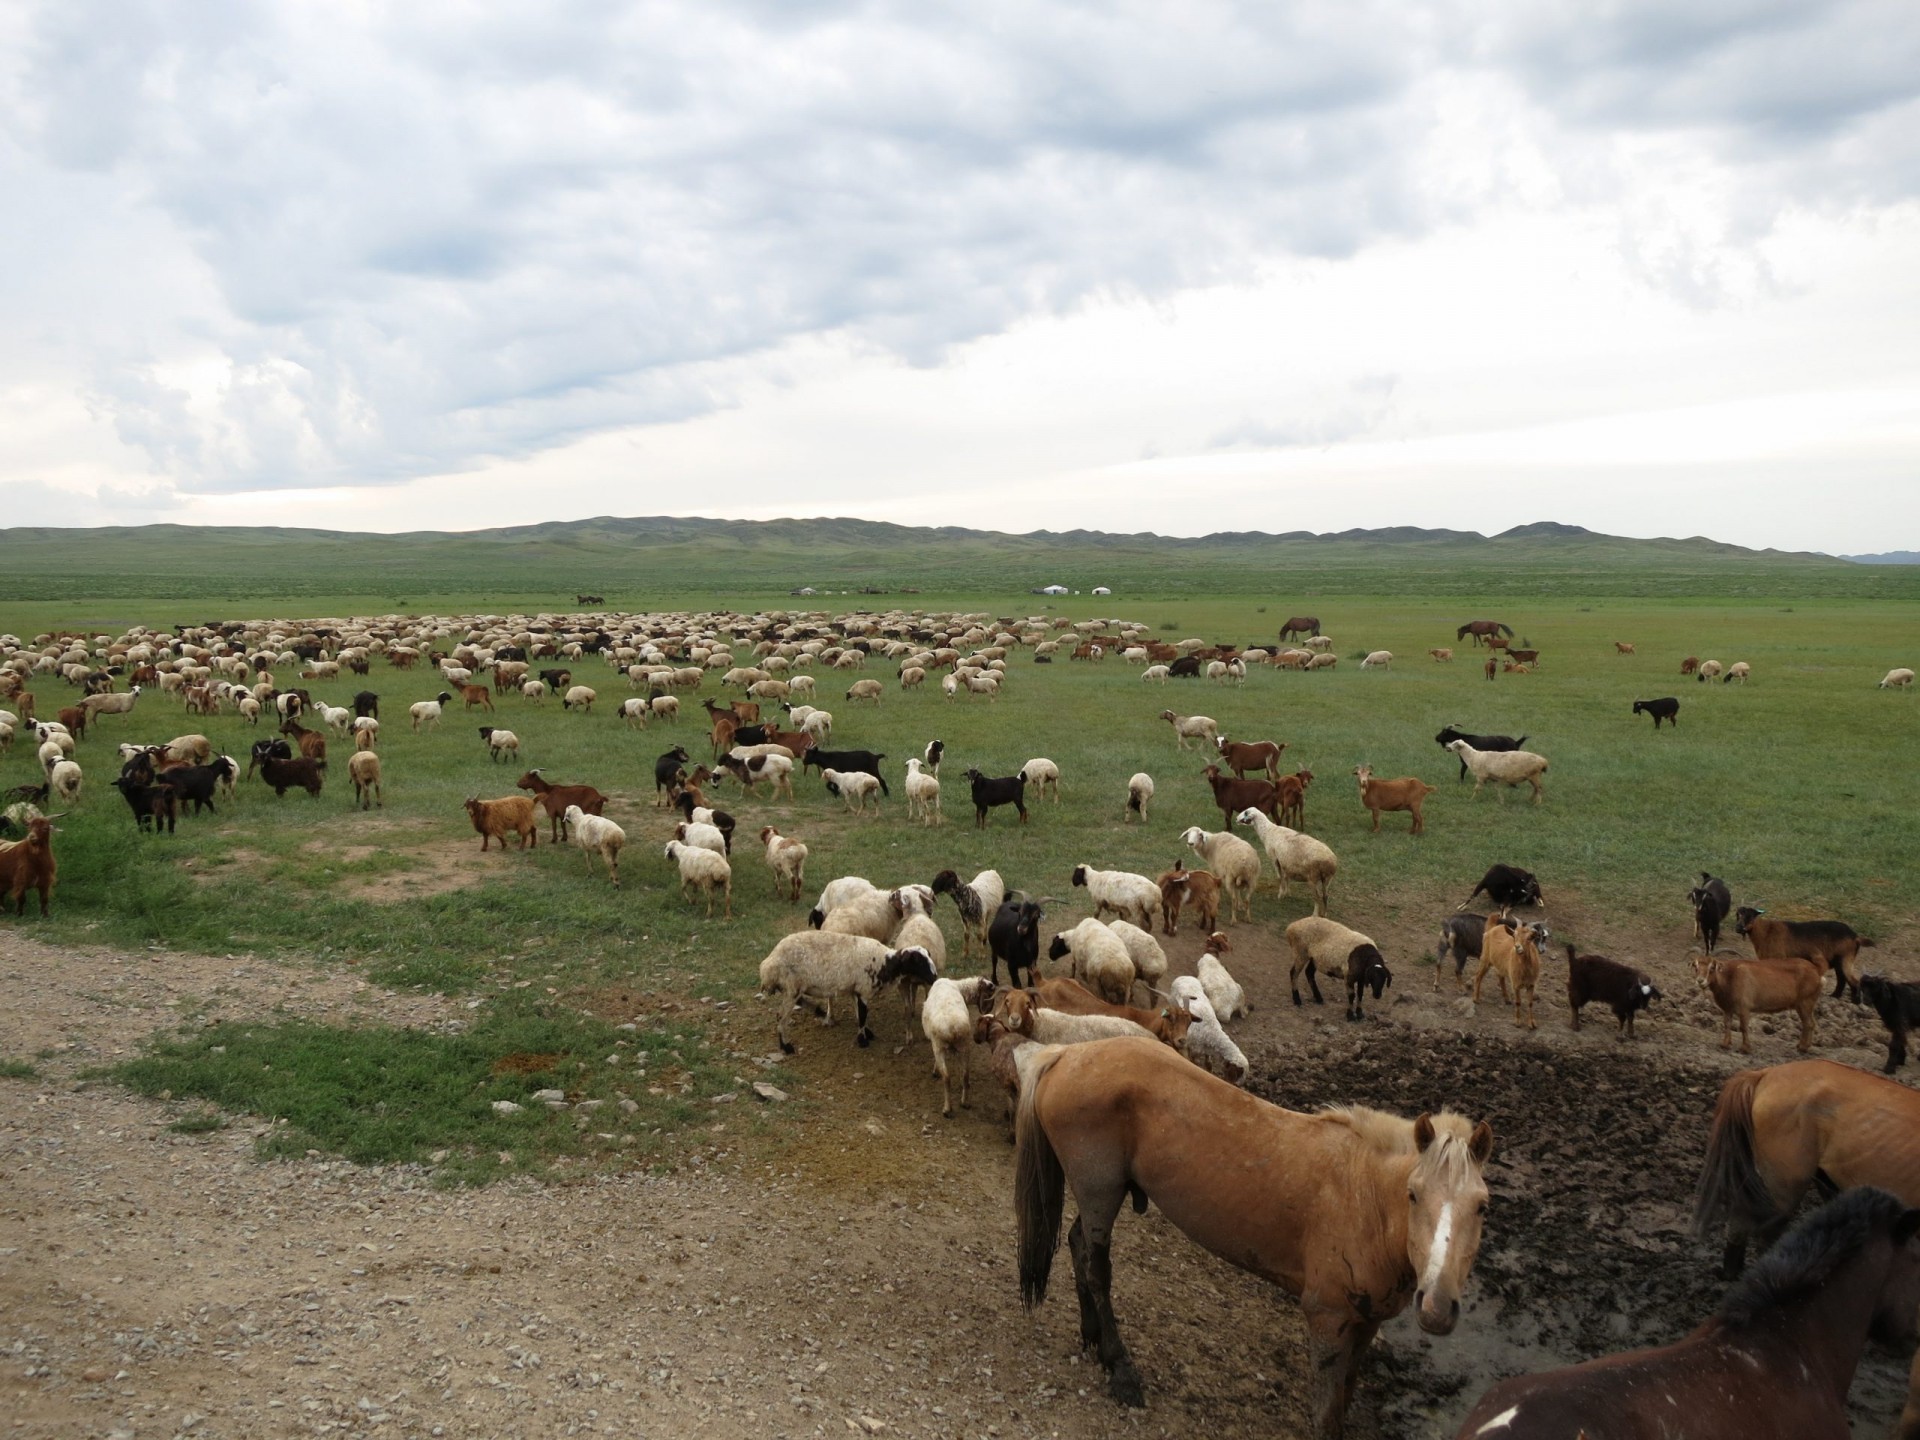 Mixed livestock, central Mongolia. (Kevin Krajick/Earth Institute)